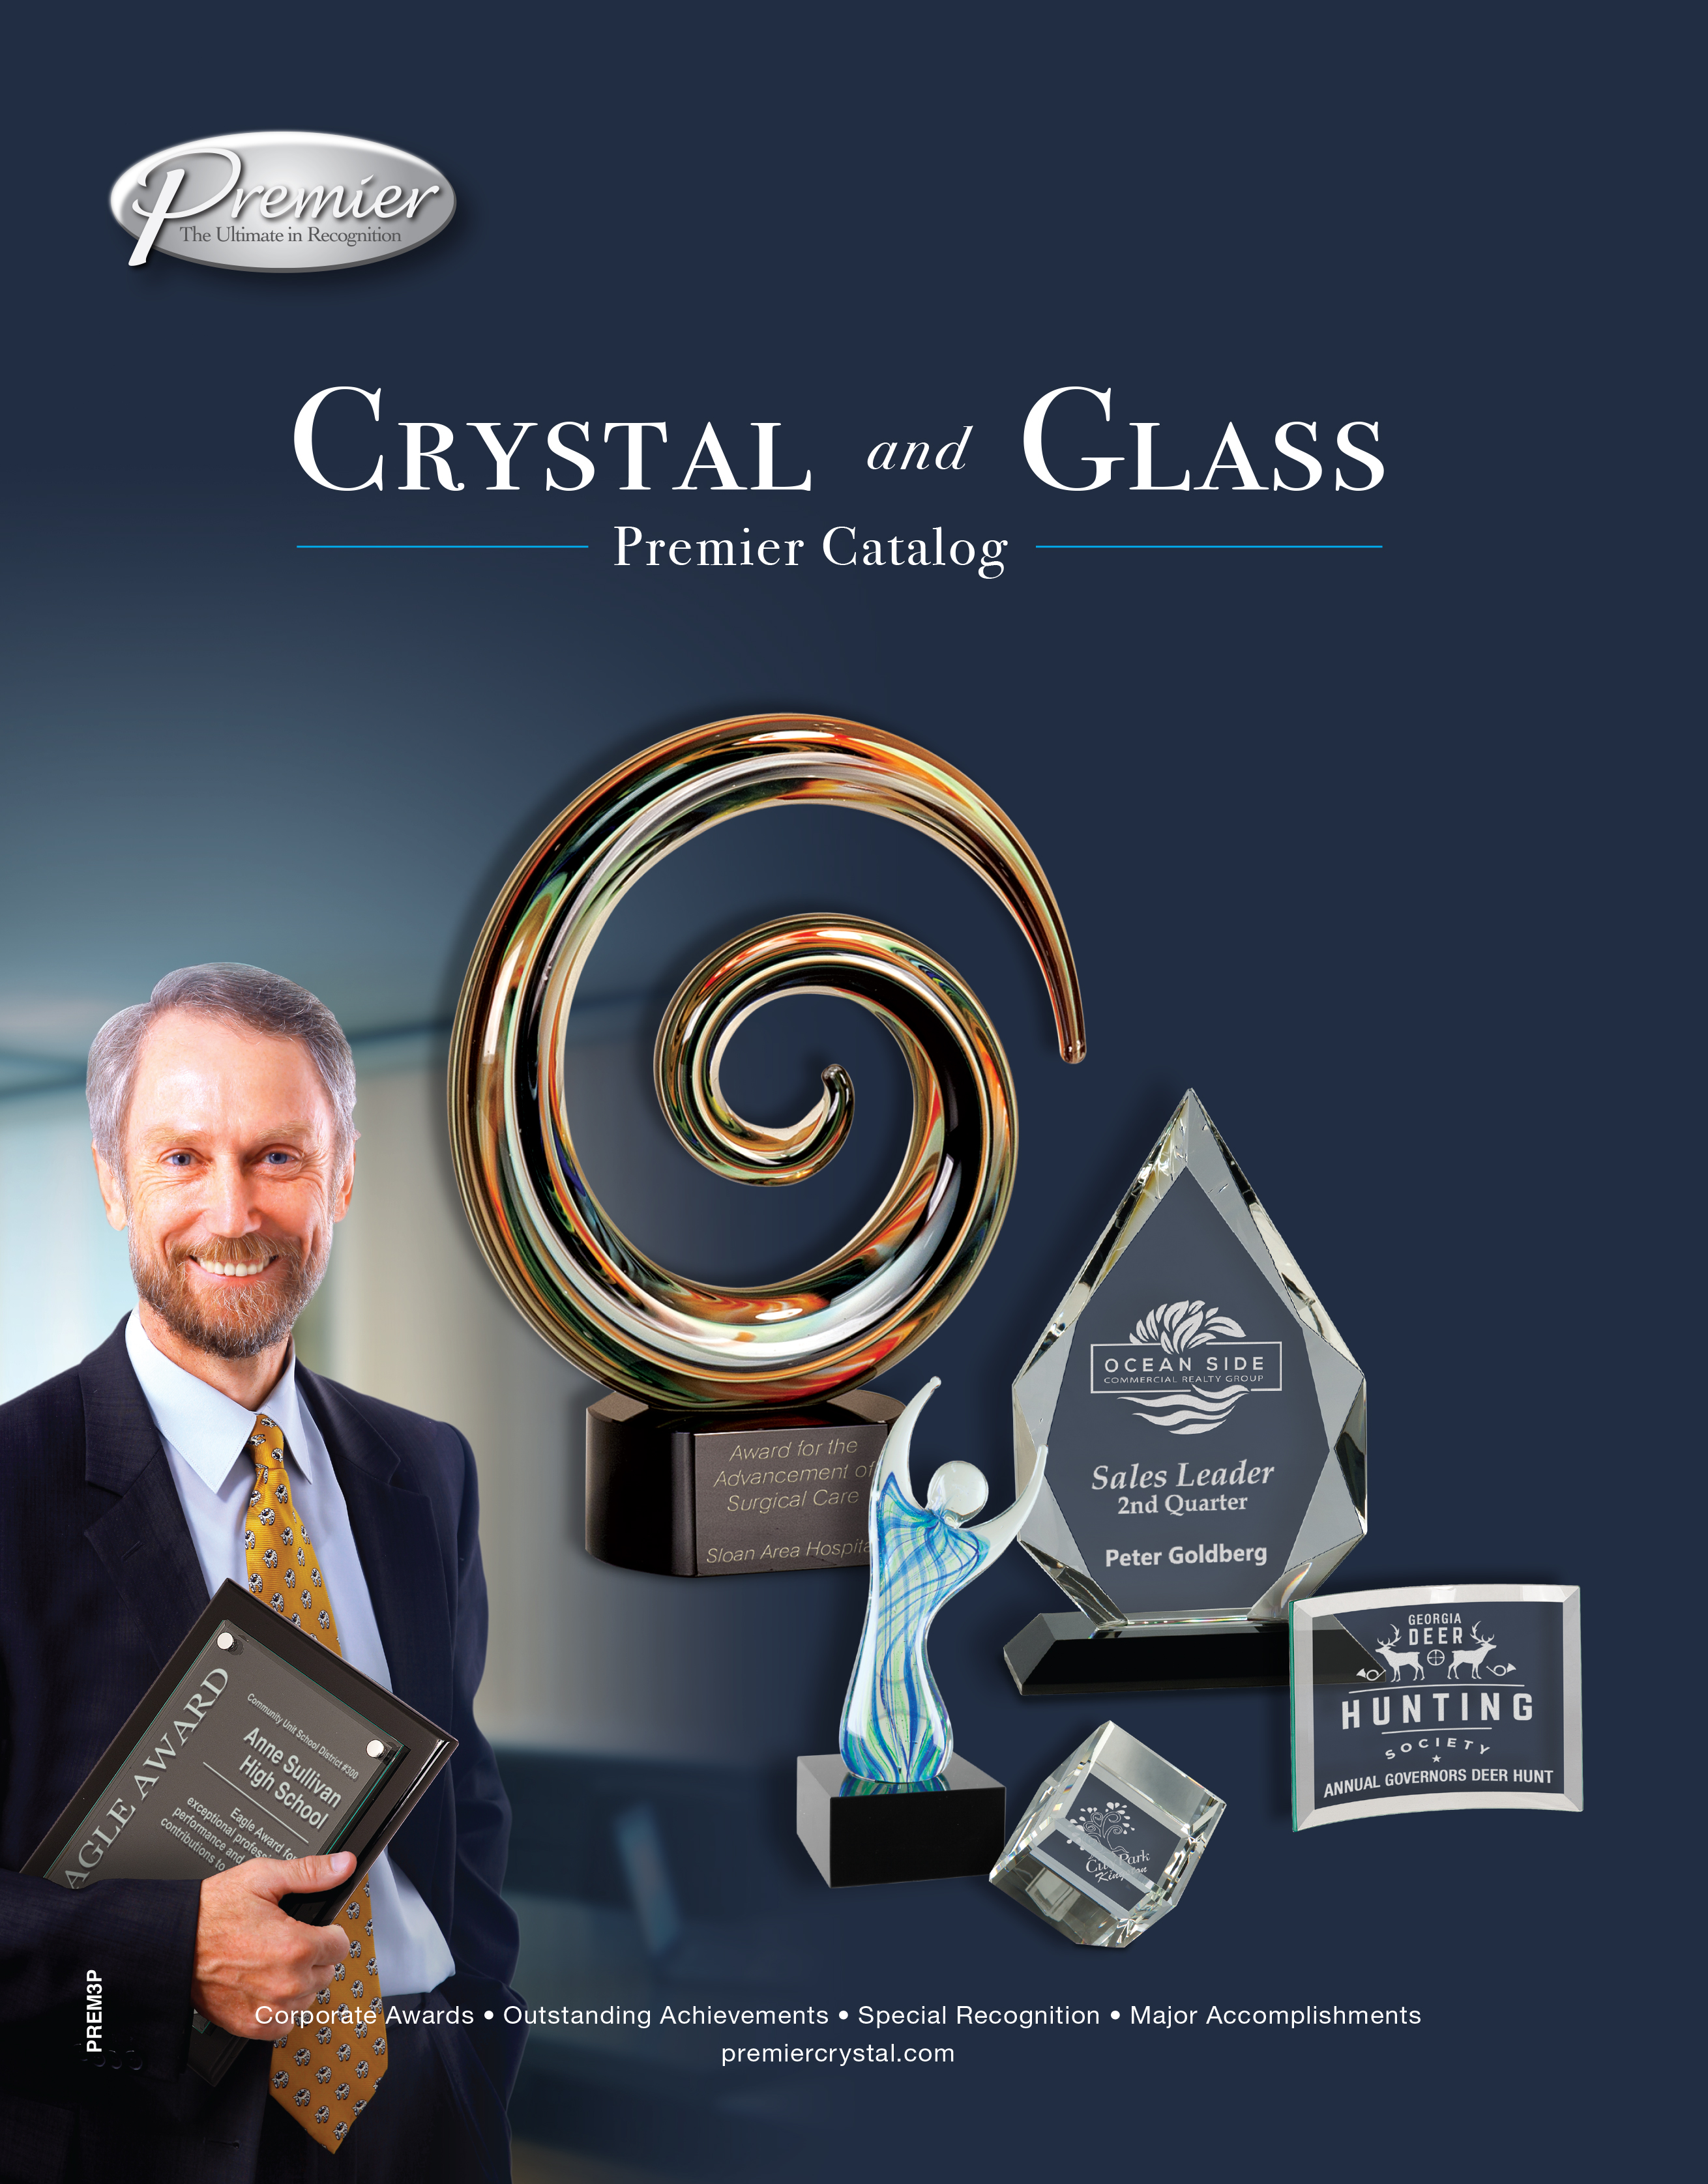 Crystal & Glass Awards